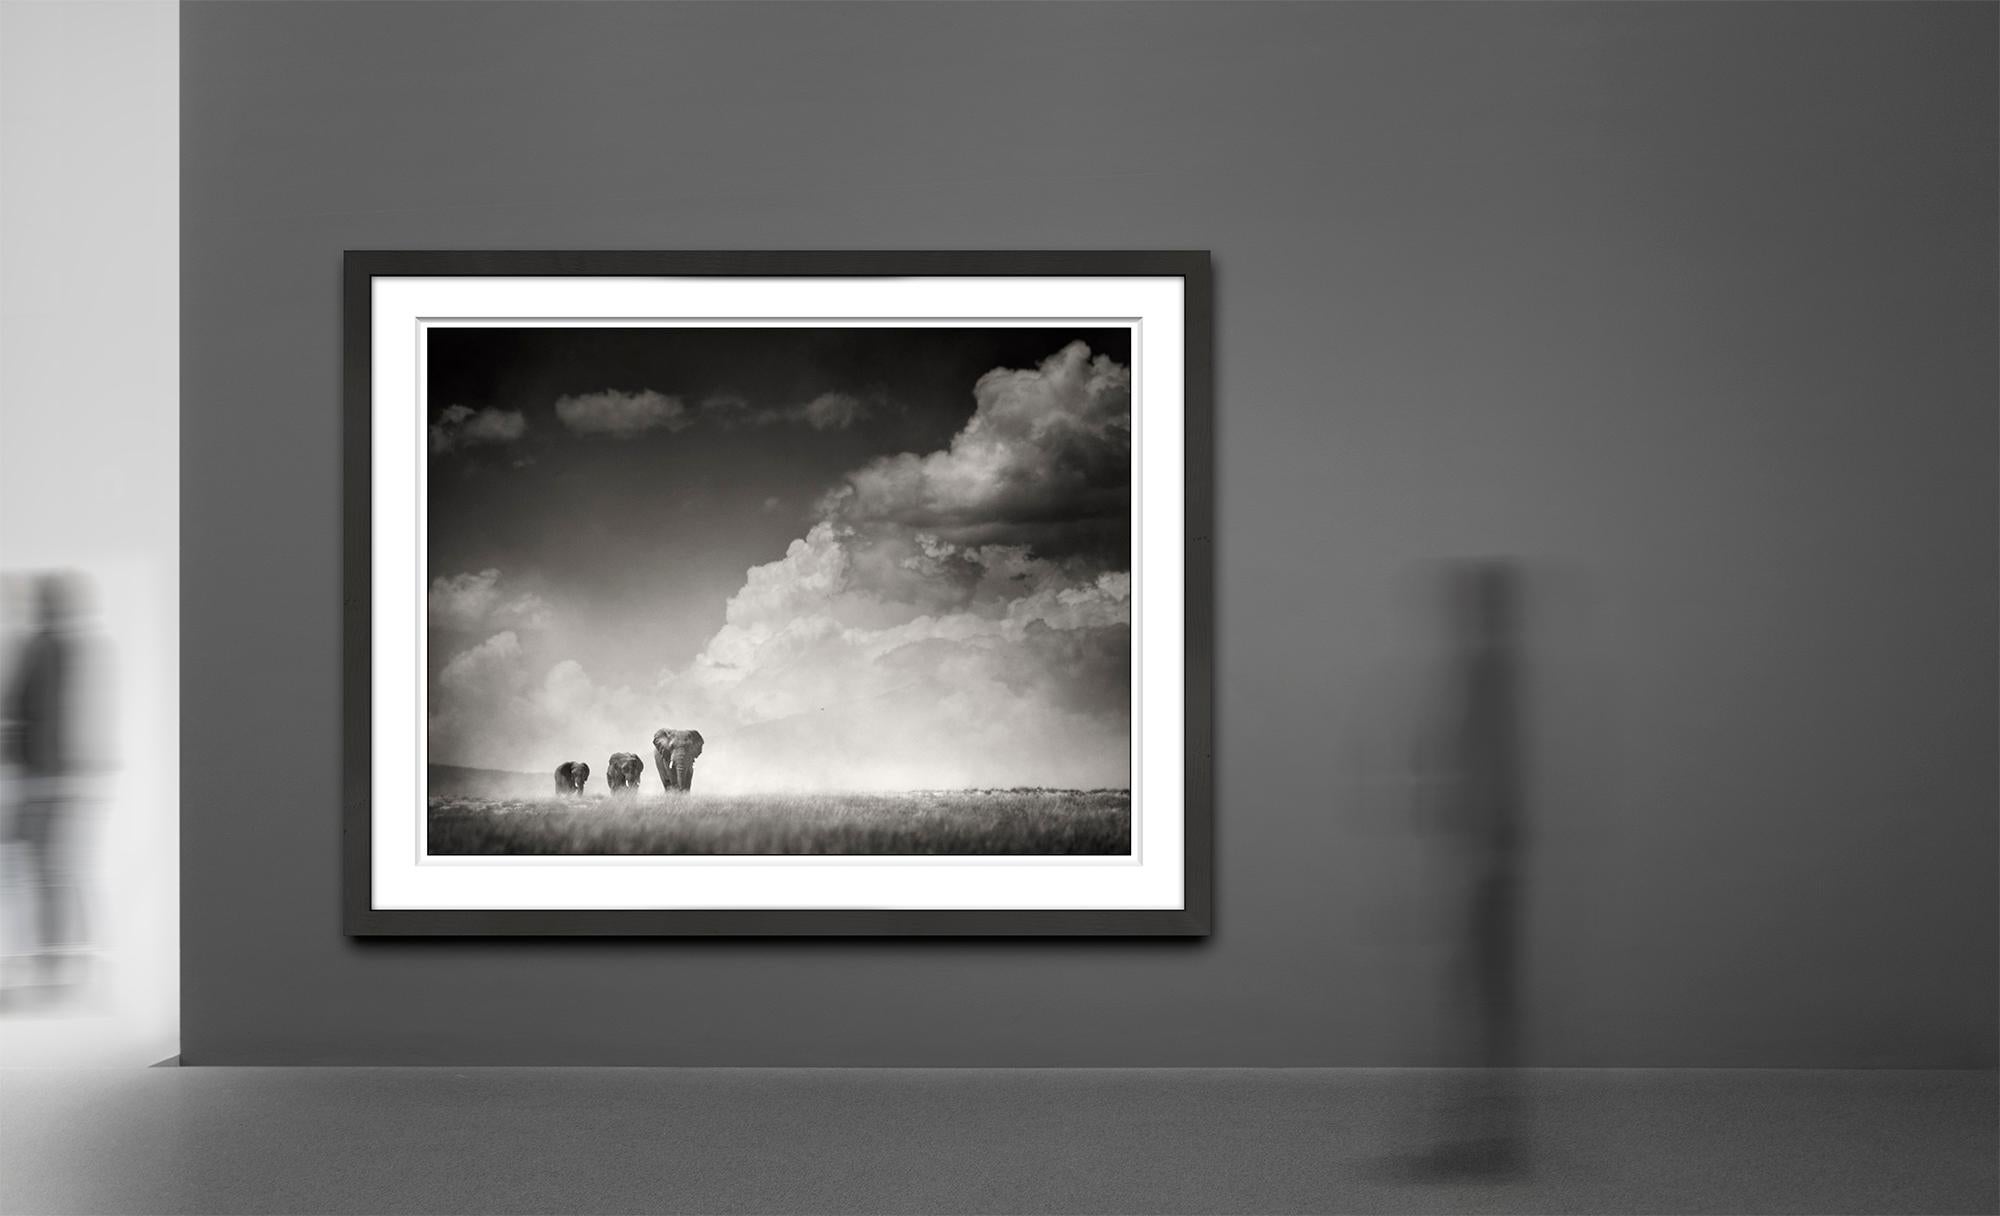 The wild bunch, Elephant, wildlife, Africa, Landscape - Contemporary Photograph by Joachim Schmeisser